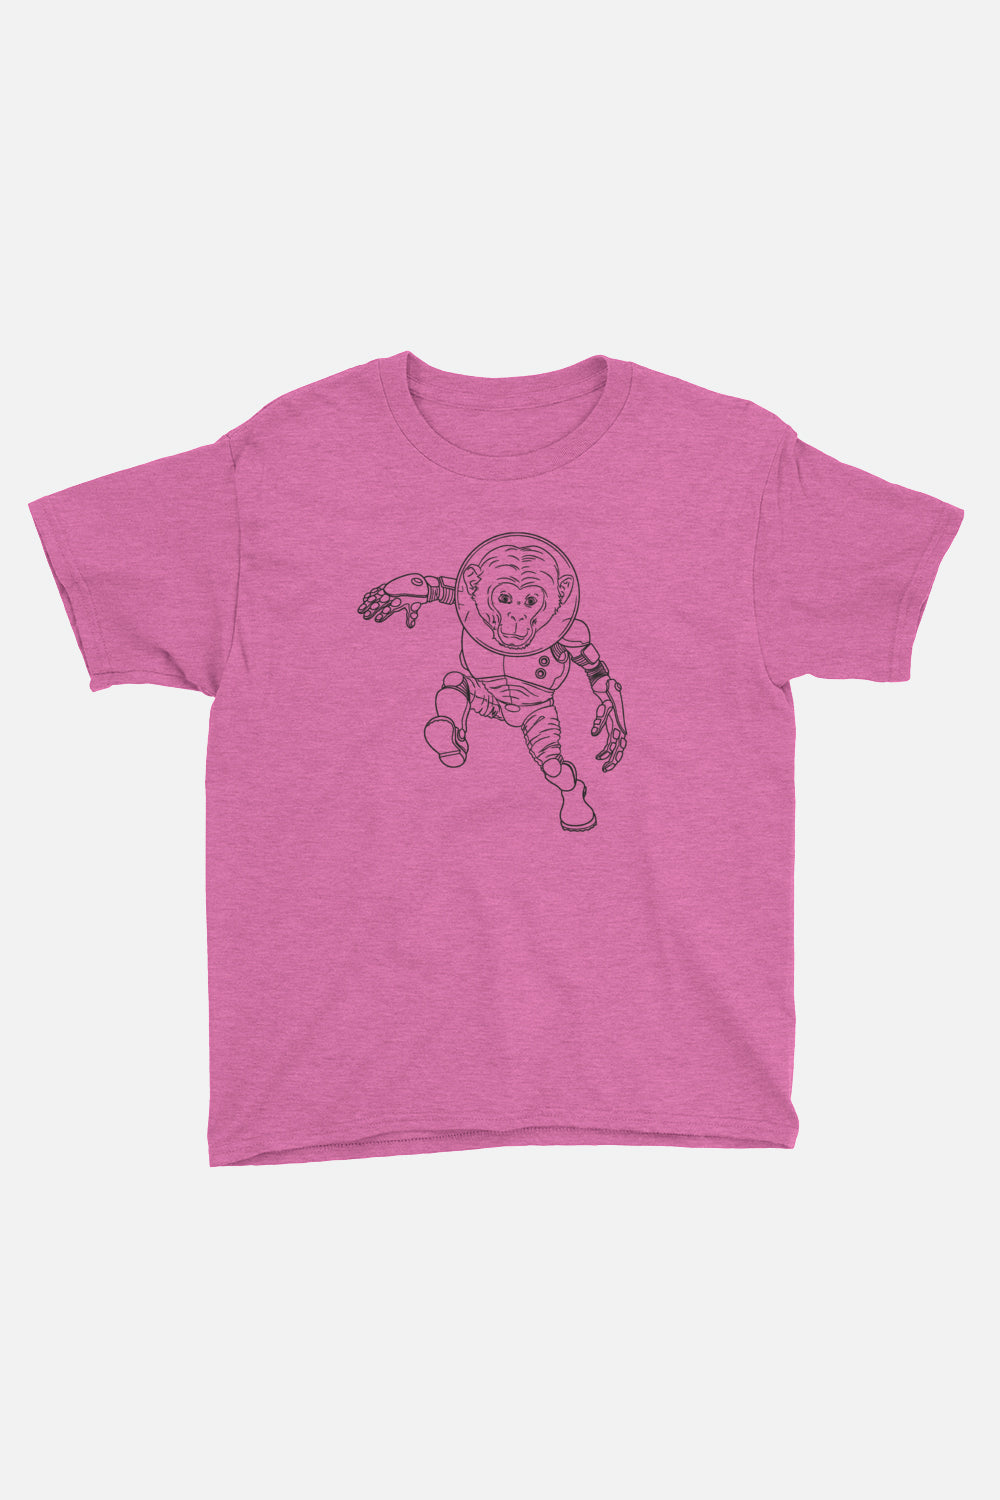 Astronanimal Space Monkey Kids T-Shirt